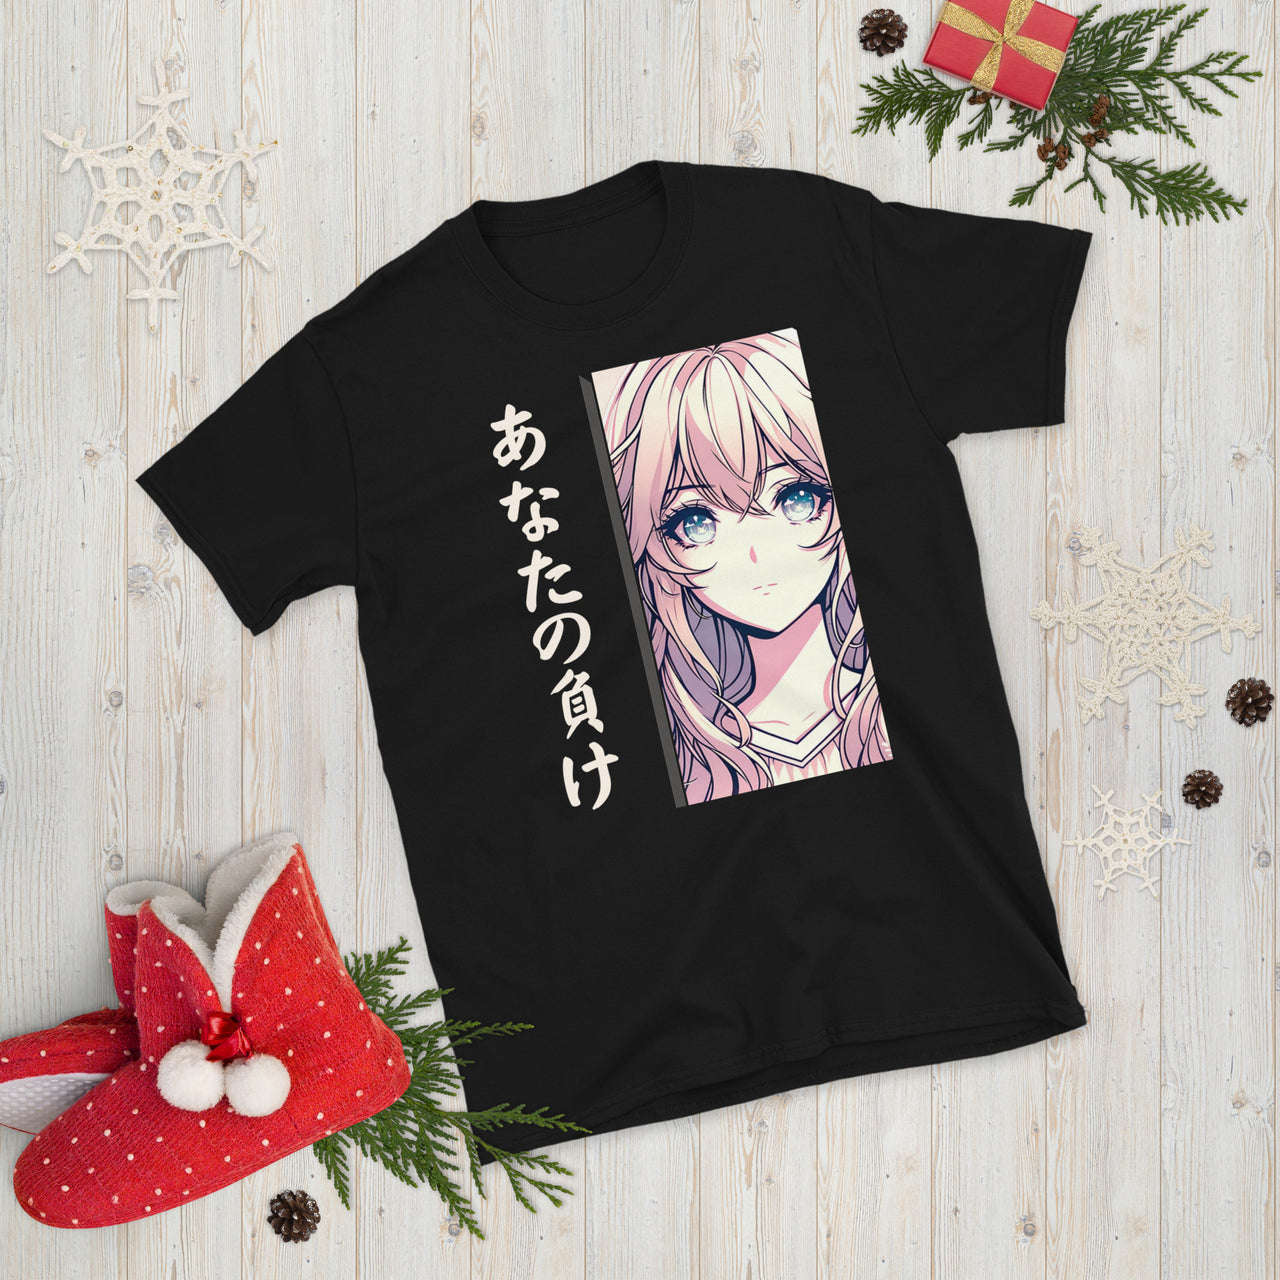 Confident Anime Girl Challenge T-Shirt